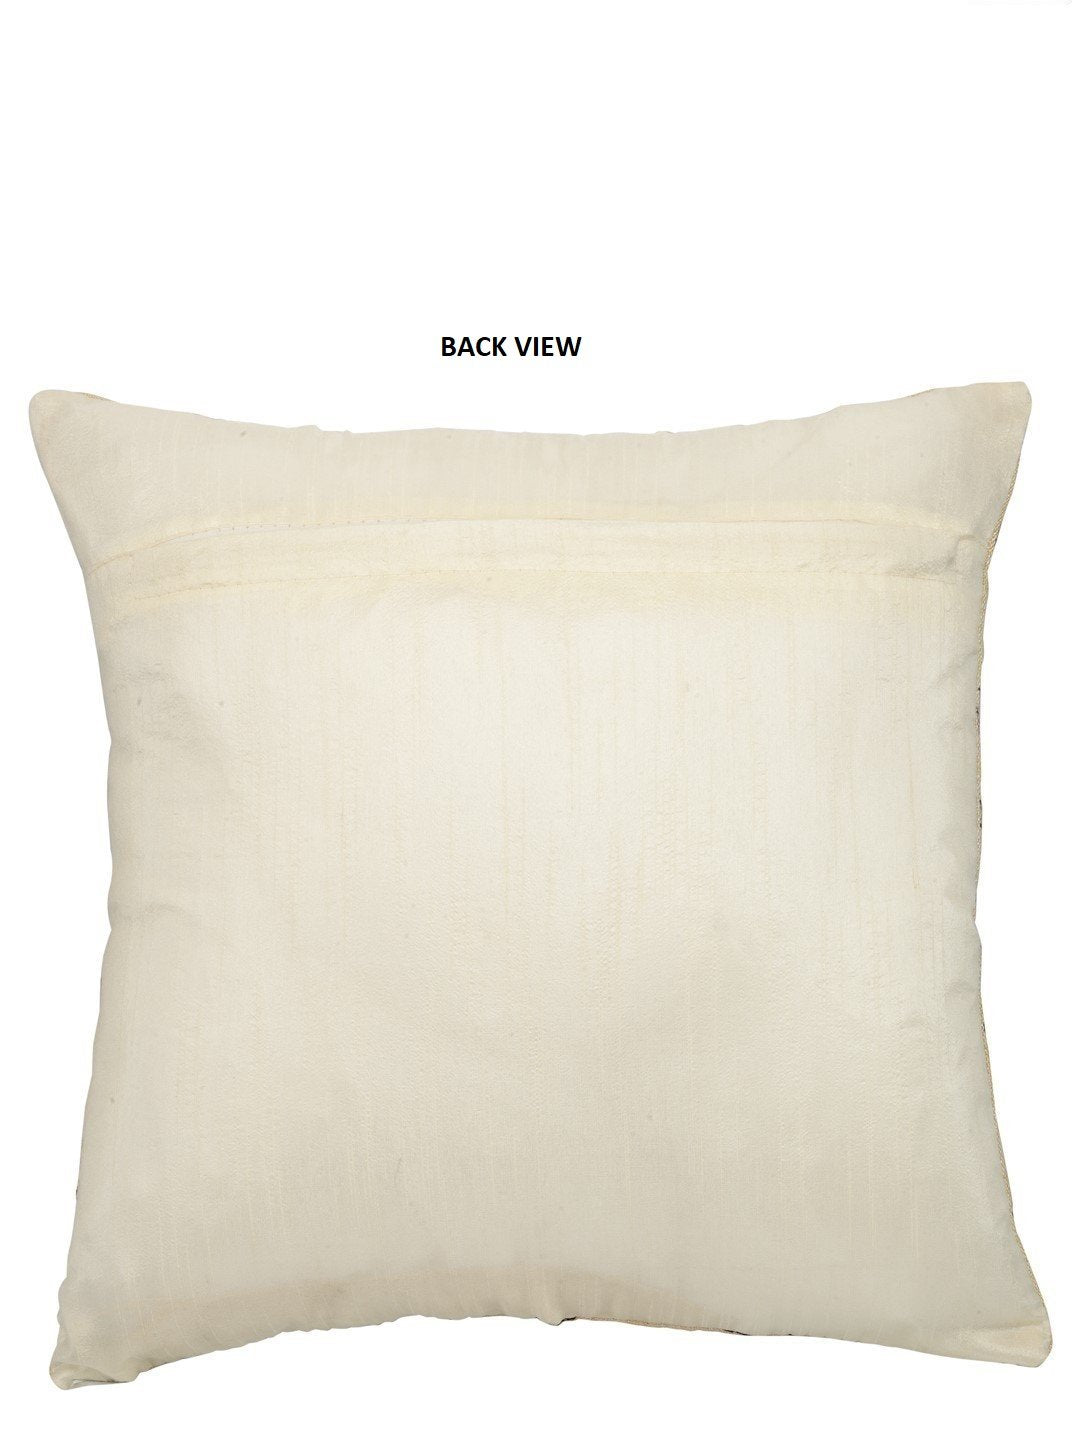 Cushion Covers: Geometric Decorative Hand Made Jute Throw/Pillow Cushion Covers